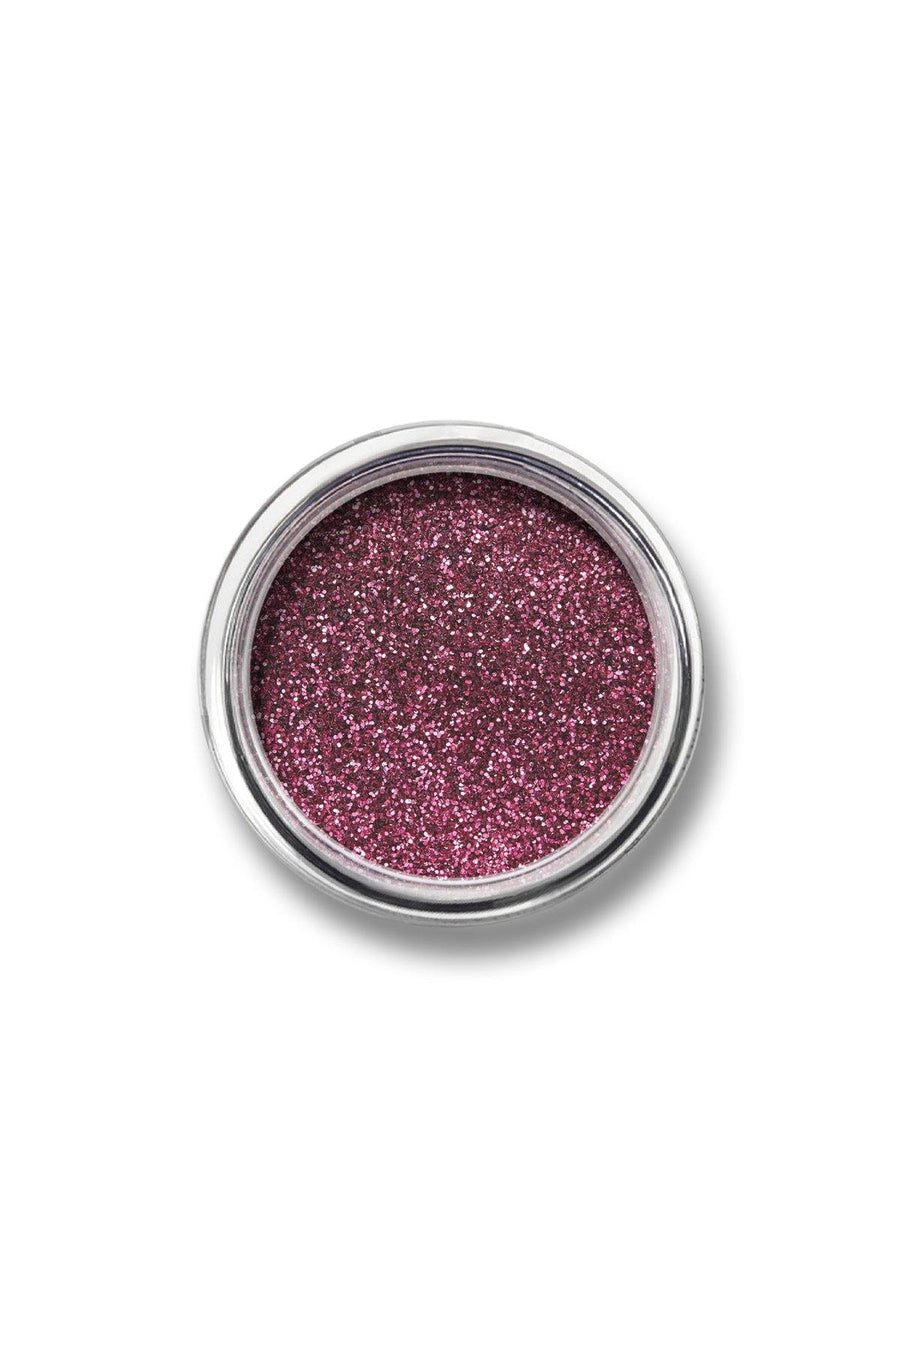 Glitter Powder #11 - Deep Rose Pink - Blend Mineral Cosmetics